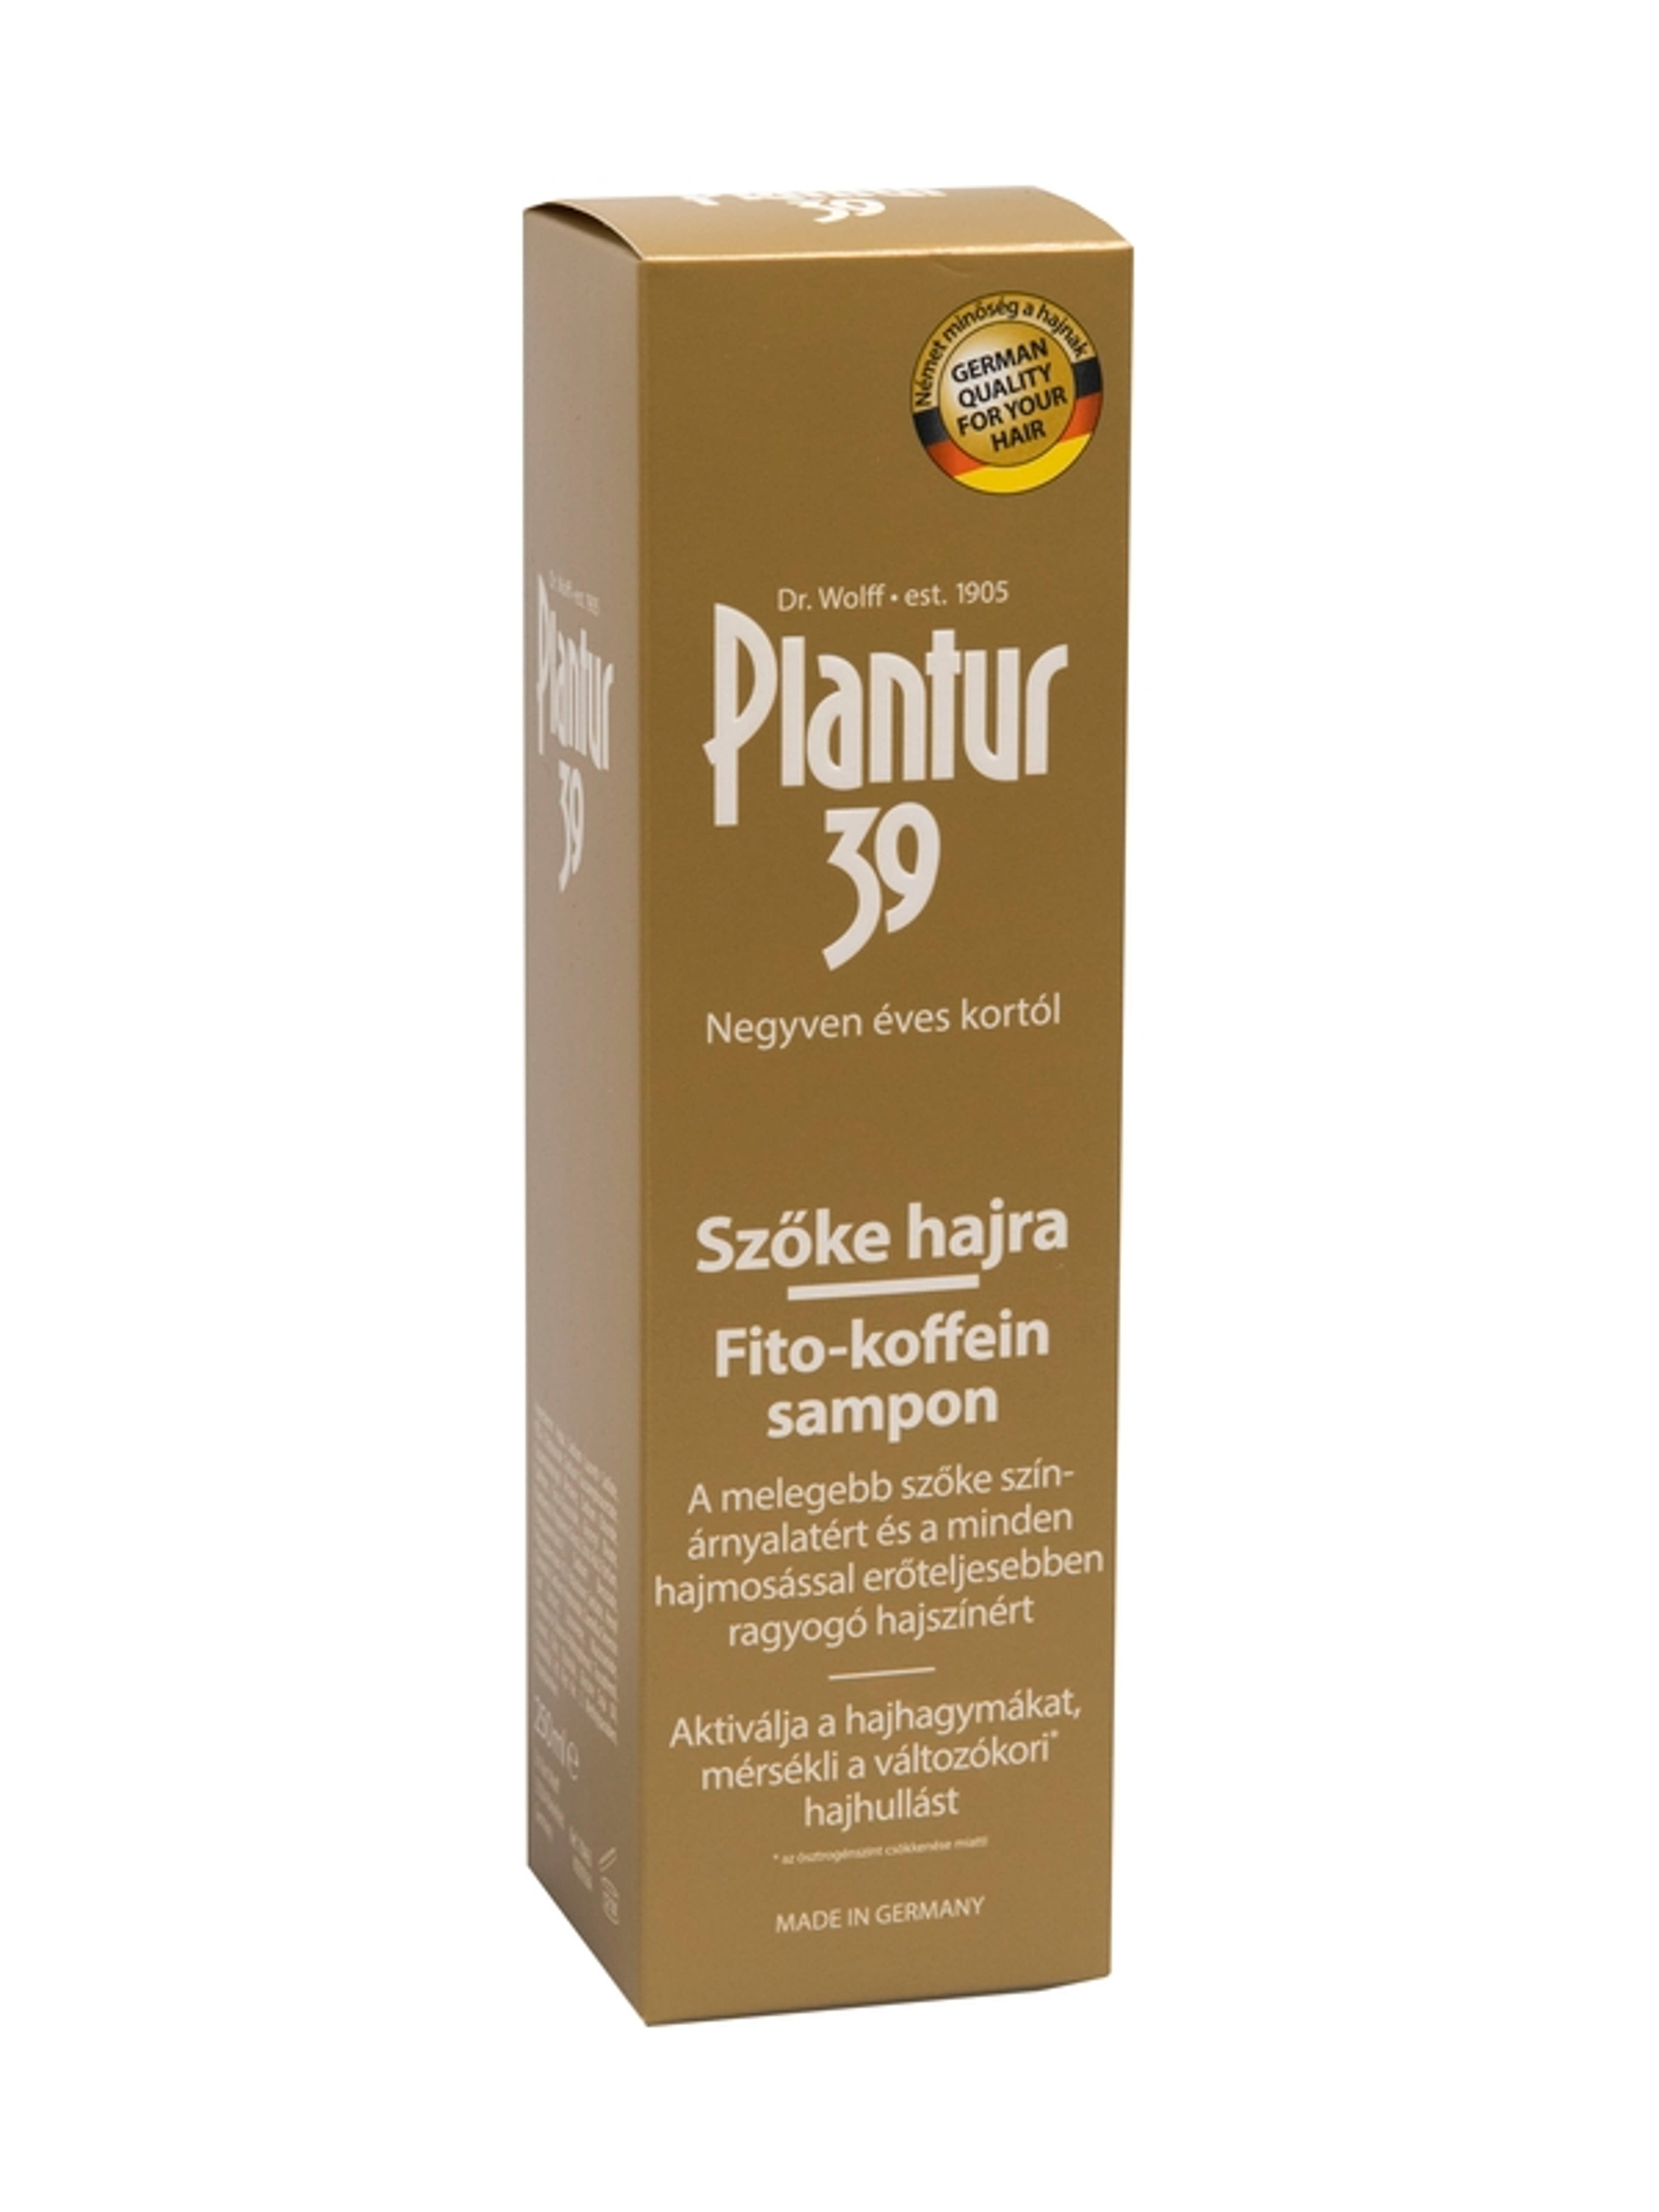 Plantur 39 fito-koffein sampon szőke hajra - 250 ml